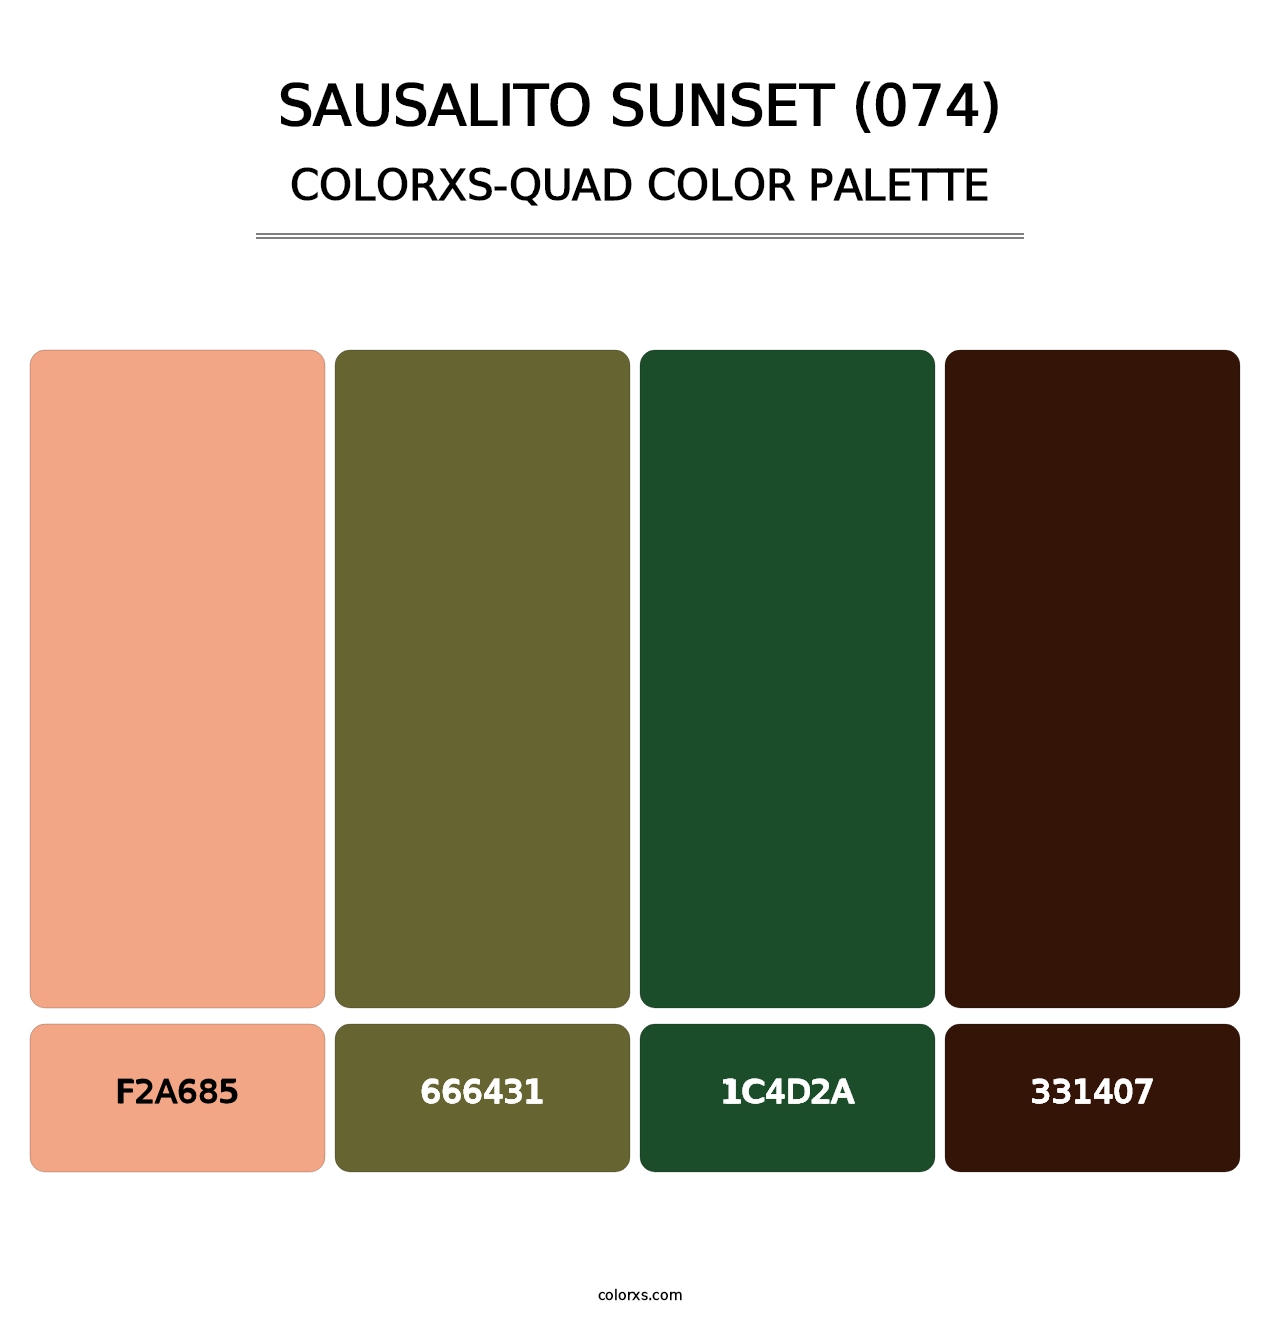 Sausalito Sunset (074) - Colorxs Quad Palette